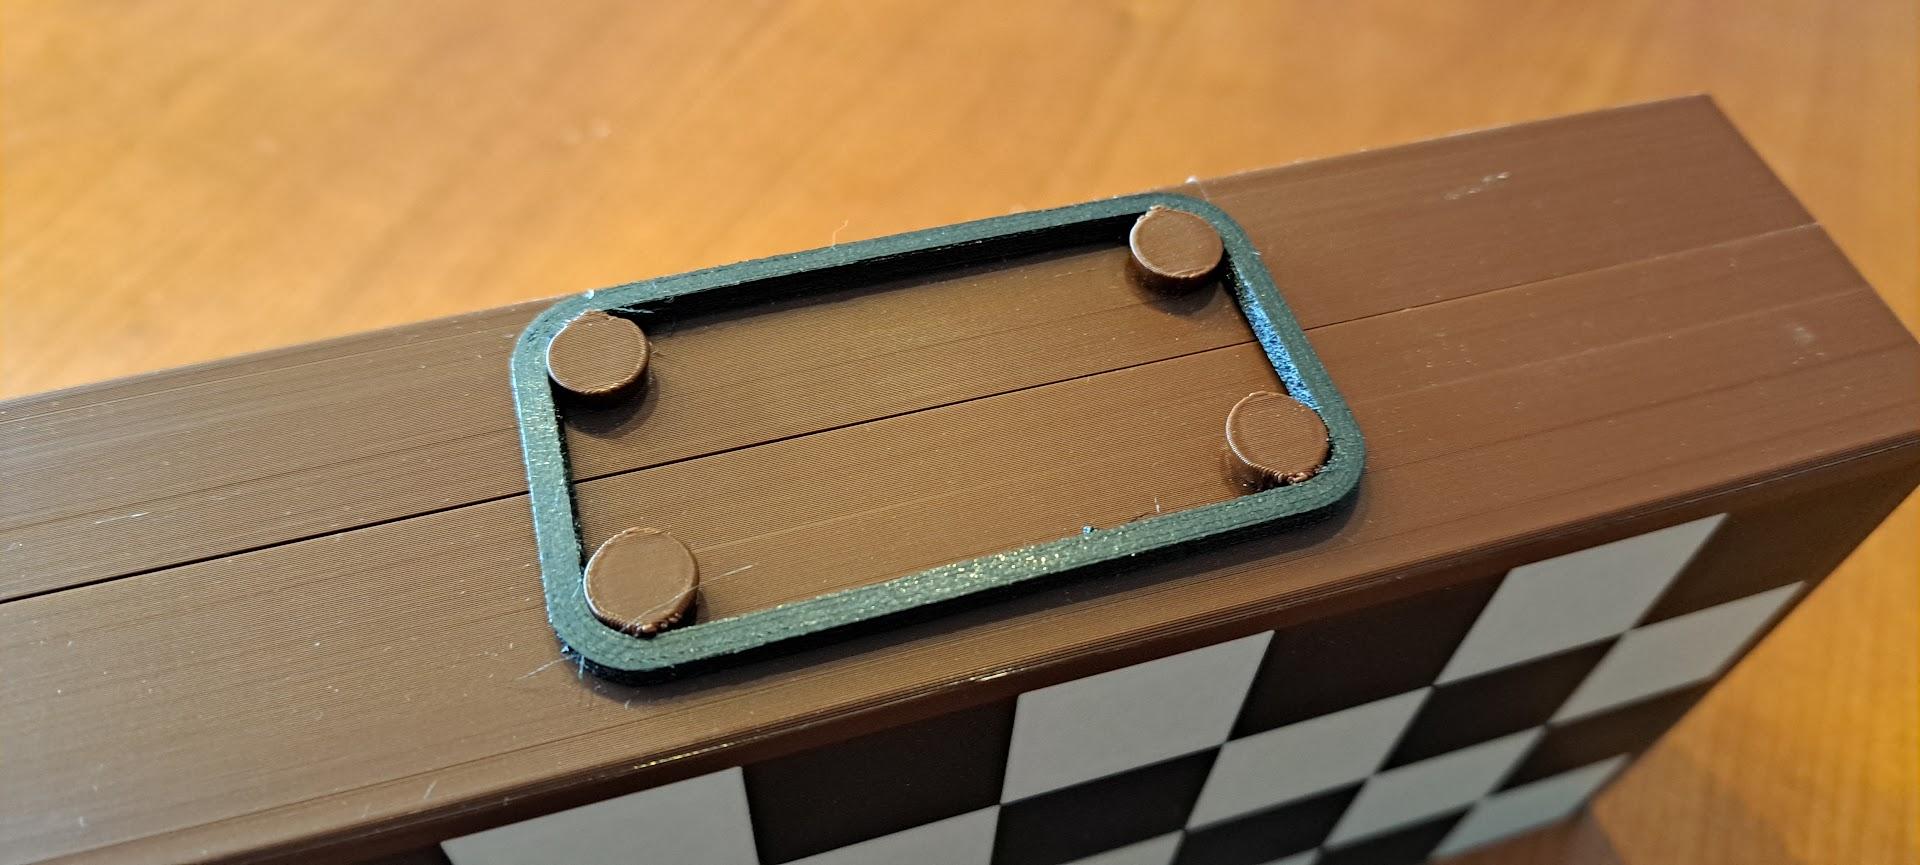 Portable Chess Board MMU 3d model